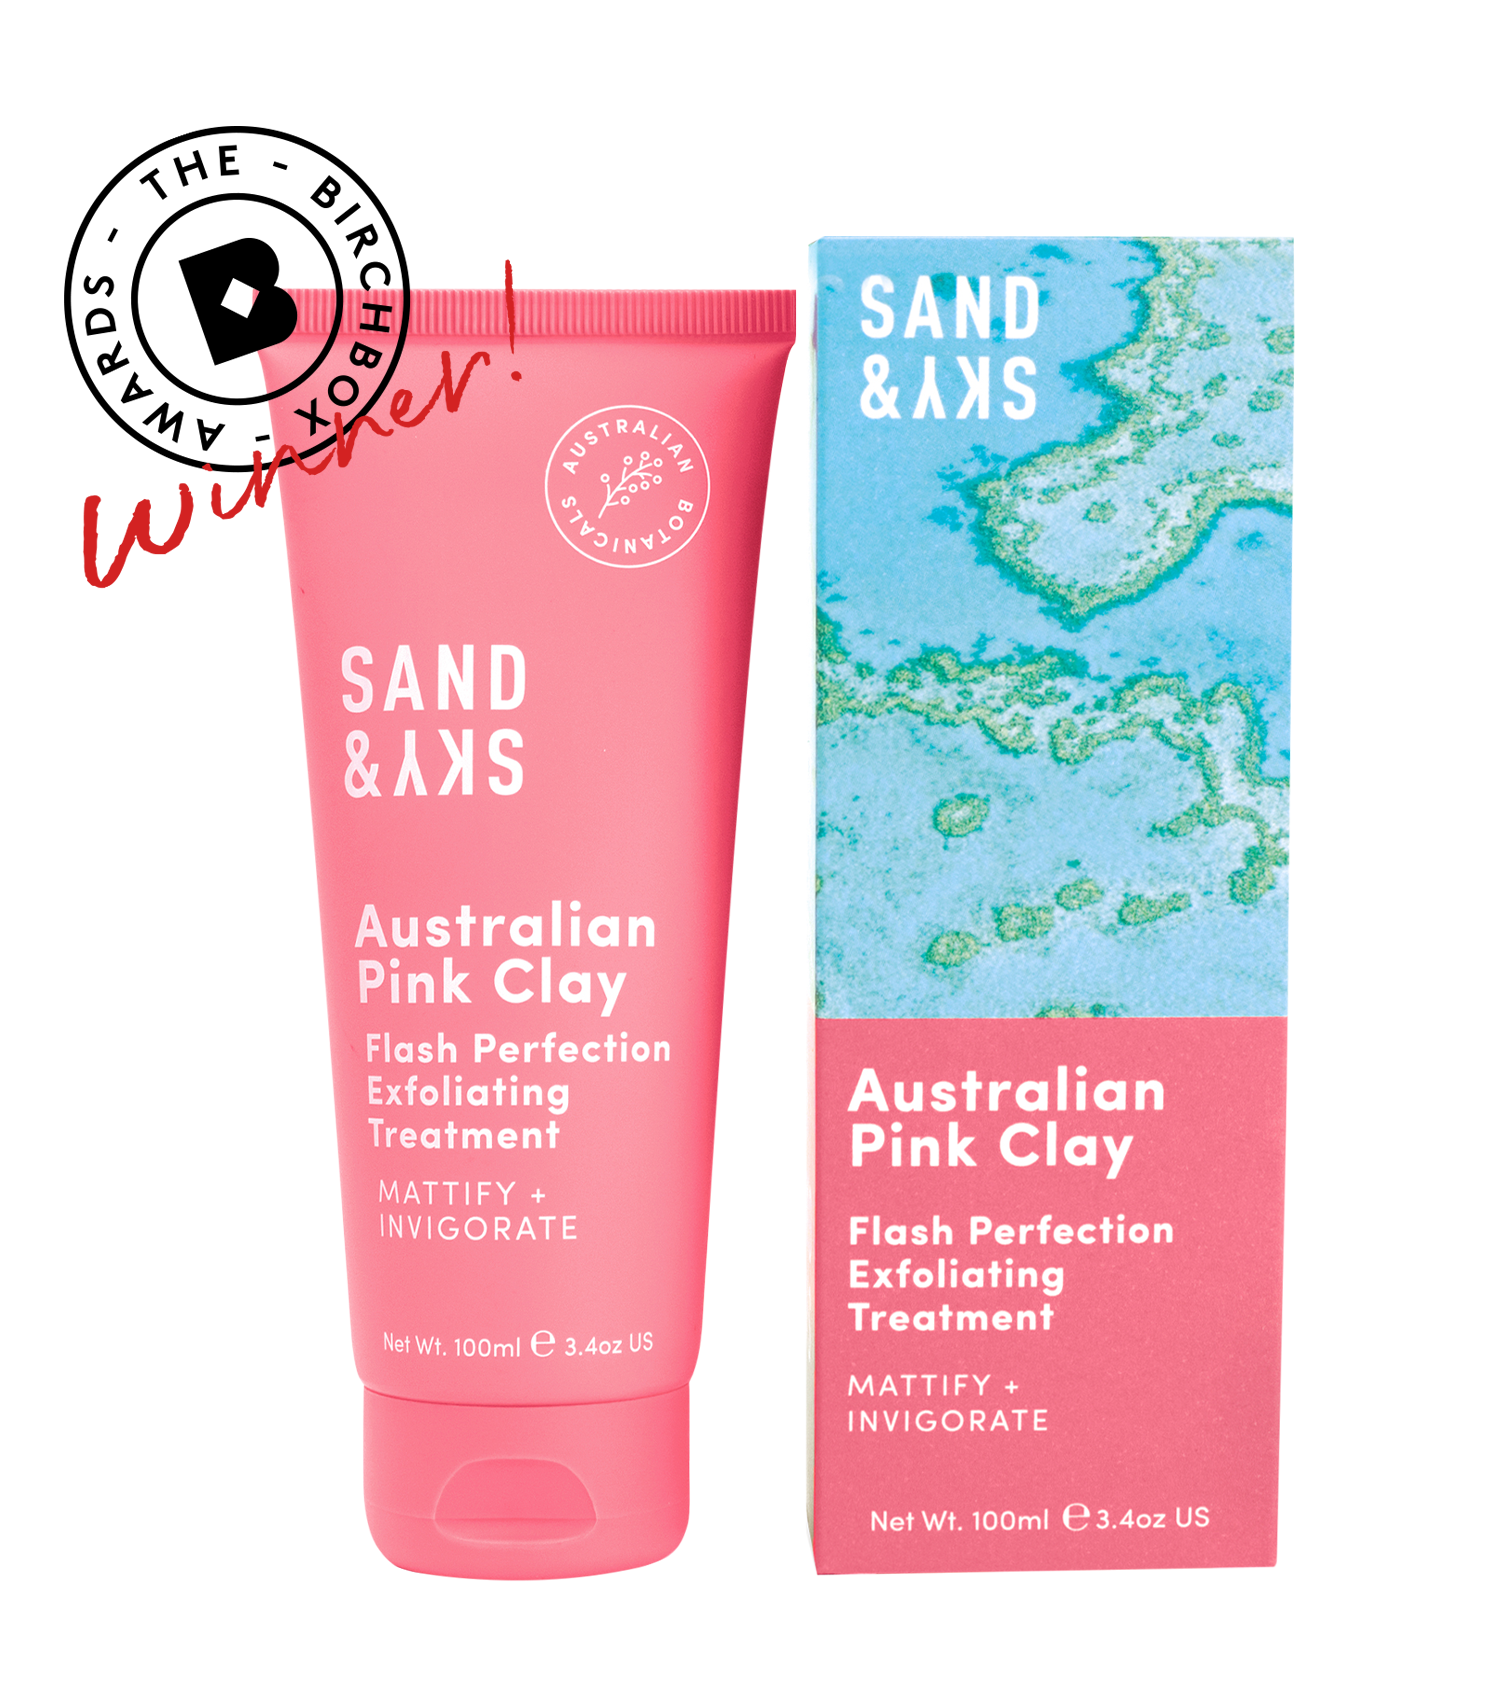 SAND & SKY Australian Pink Clay - Flash Perfection Exfoliating Treatment  1